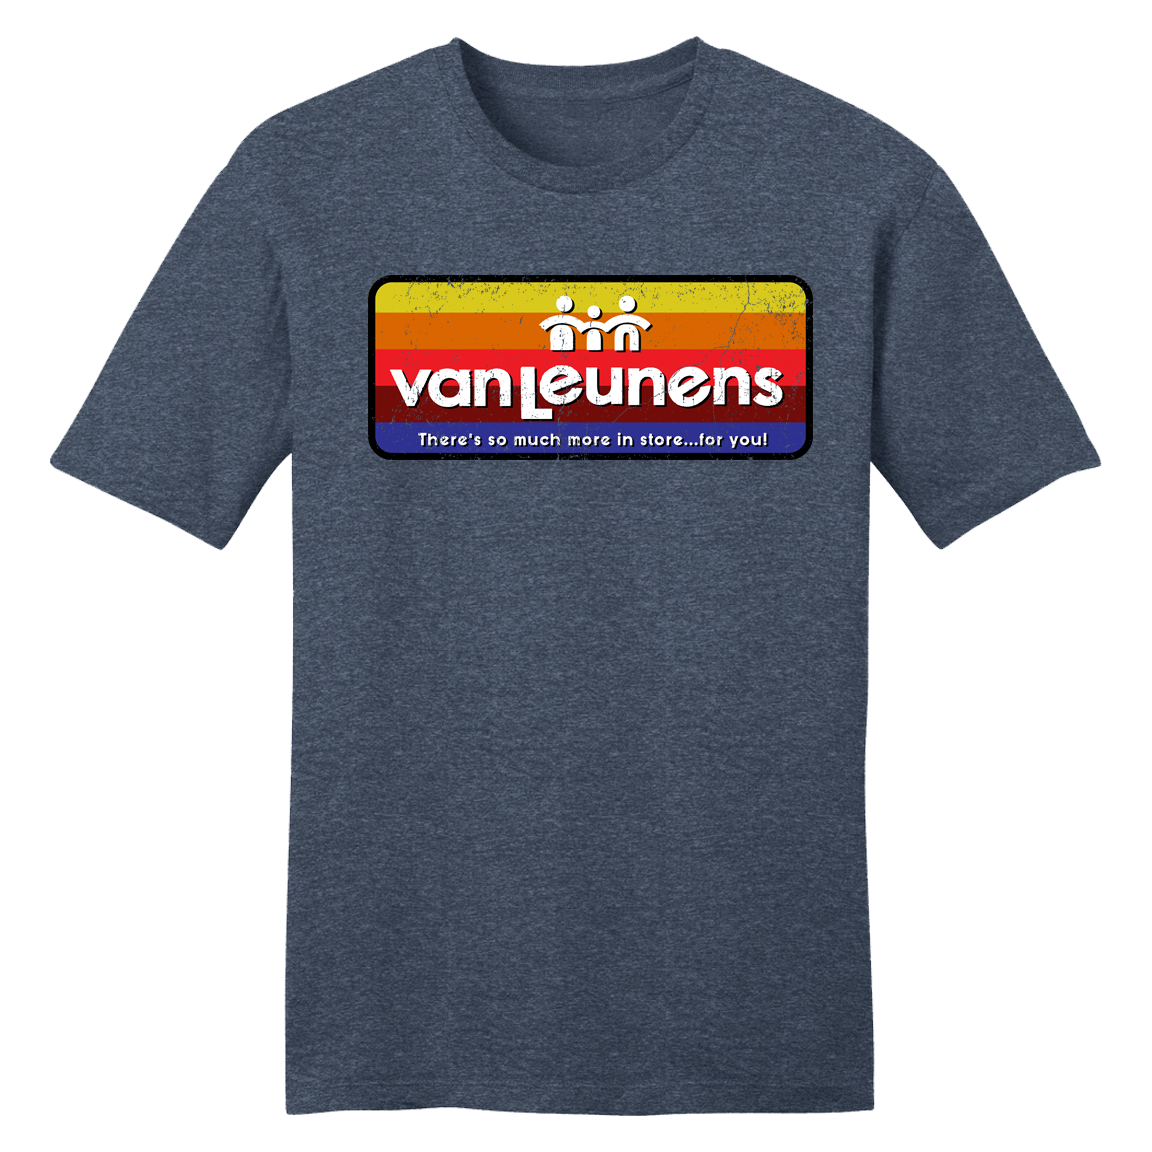 Van Leunens Full Color Logo